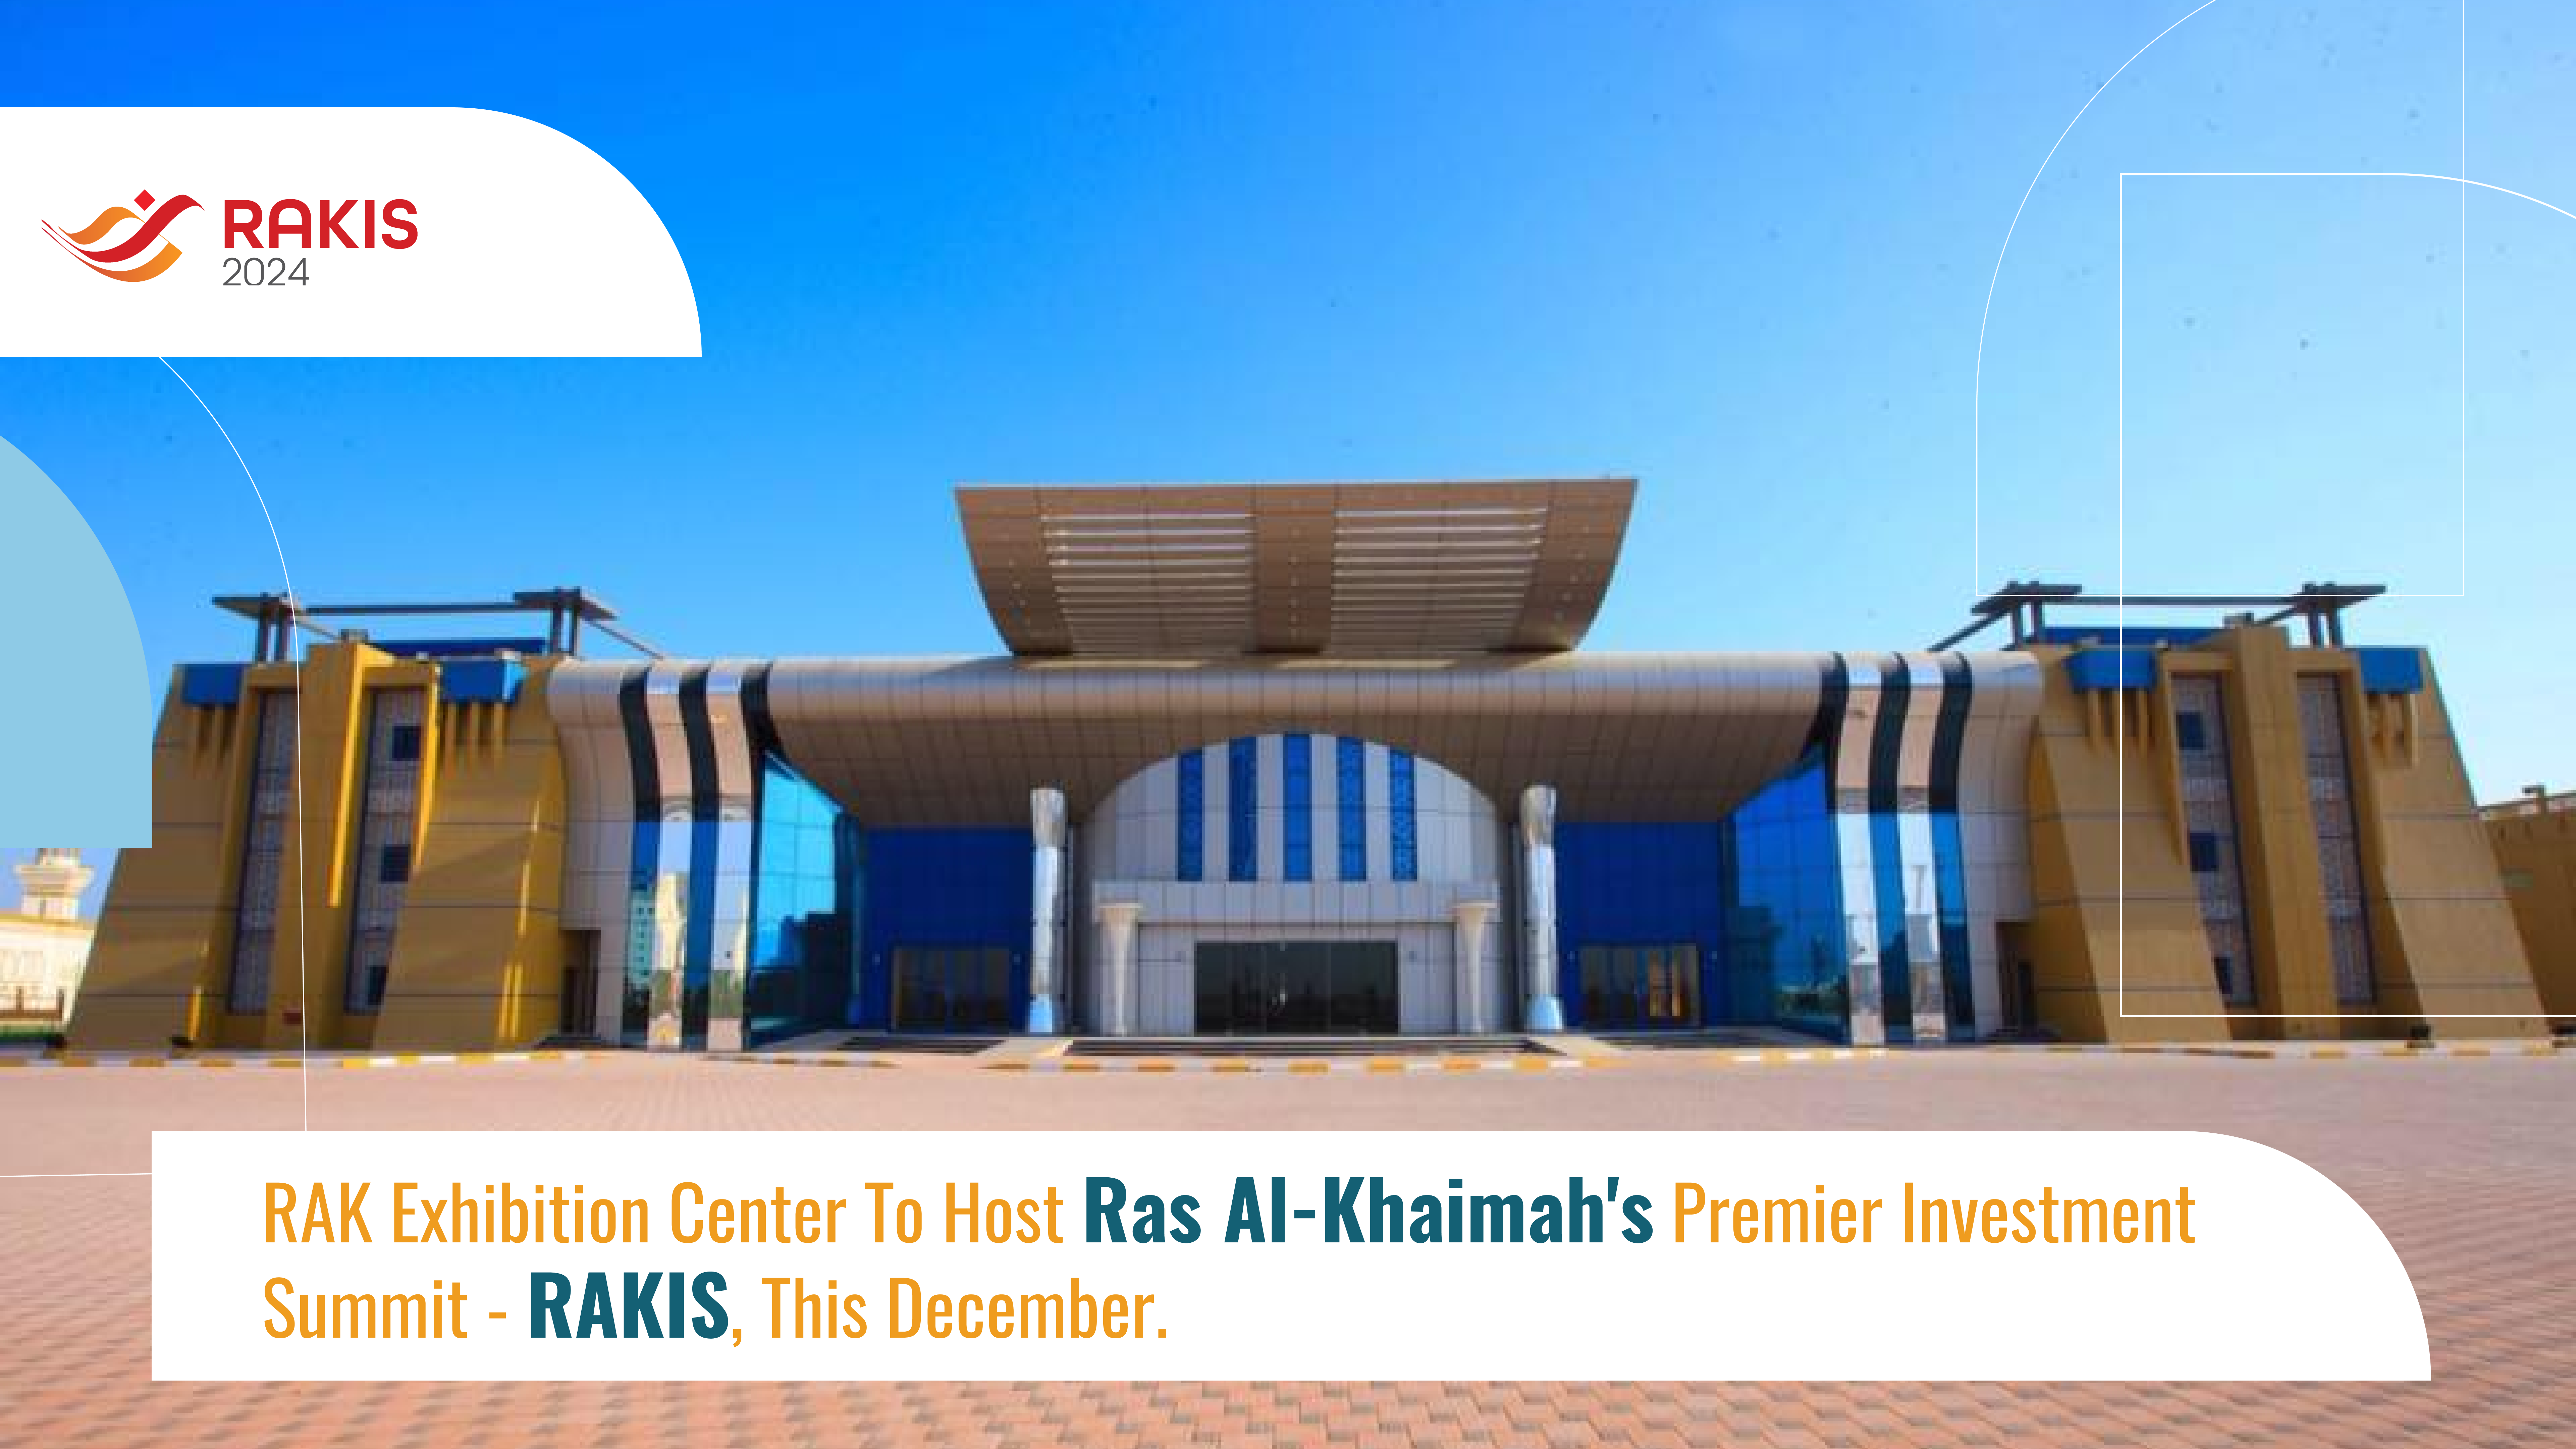 RAK Exhibition Center To Host Ras Al Khaimah's Premier Investment Summit - RAKIS, This December